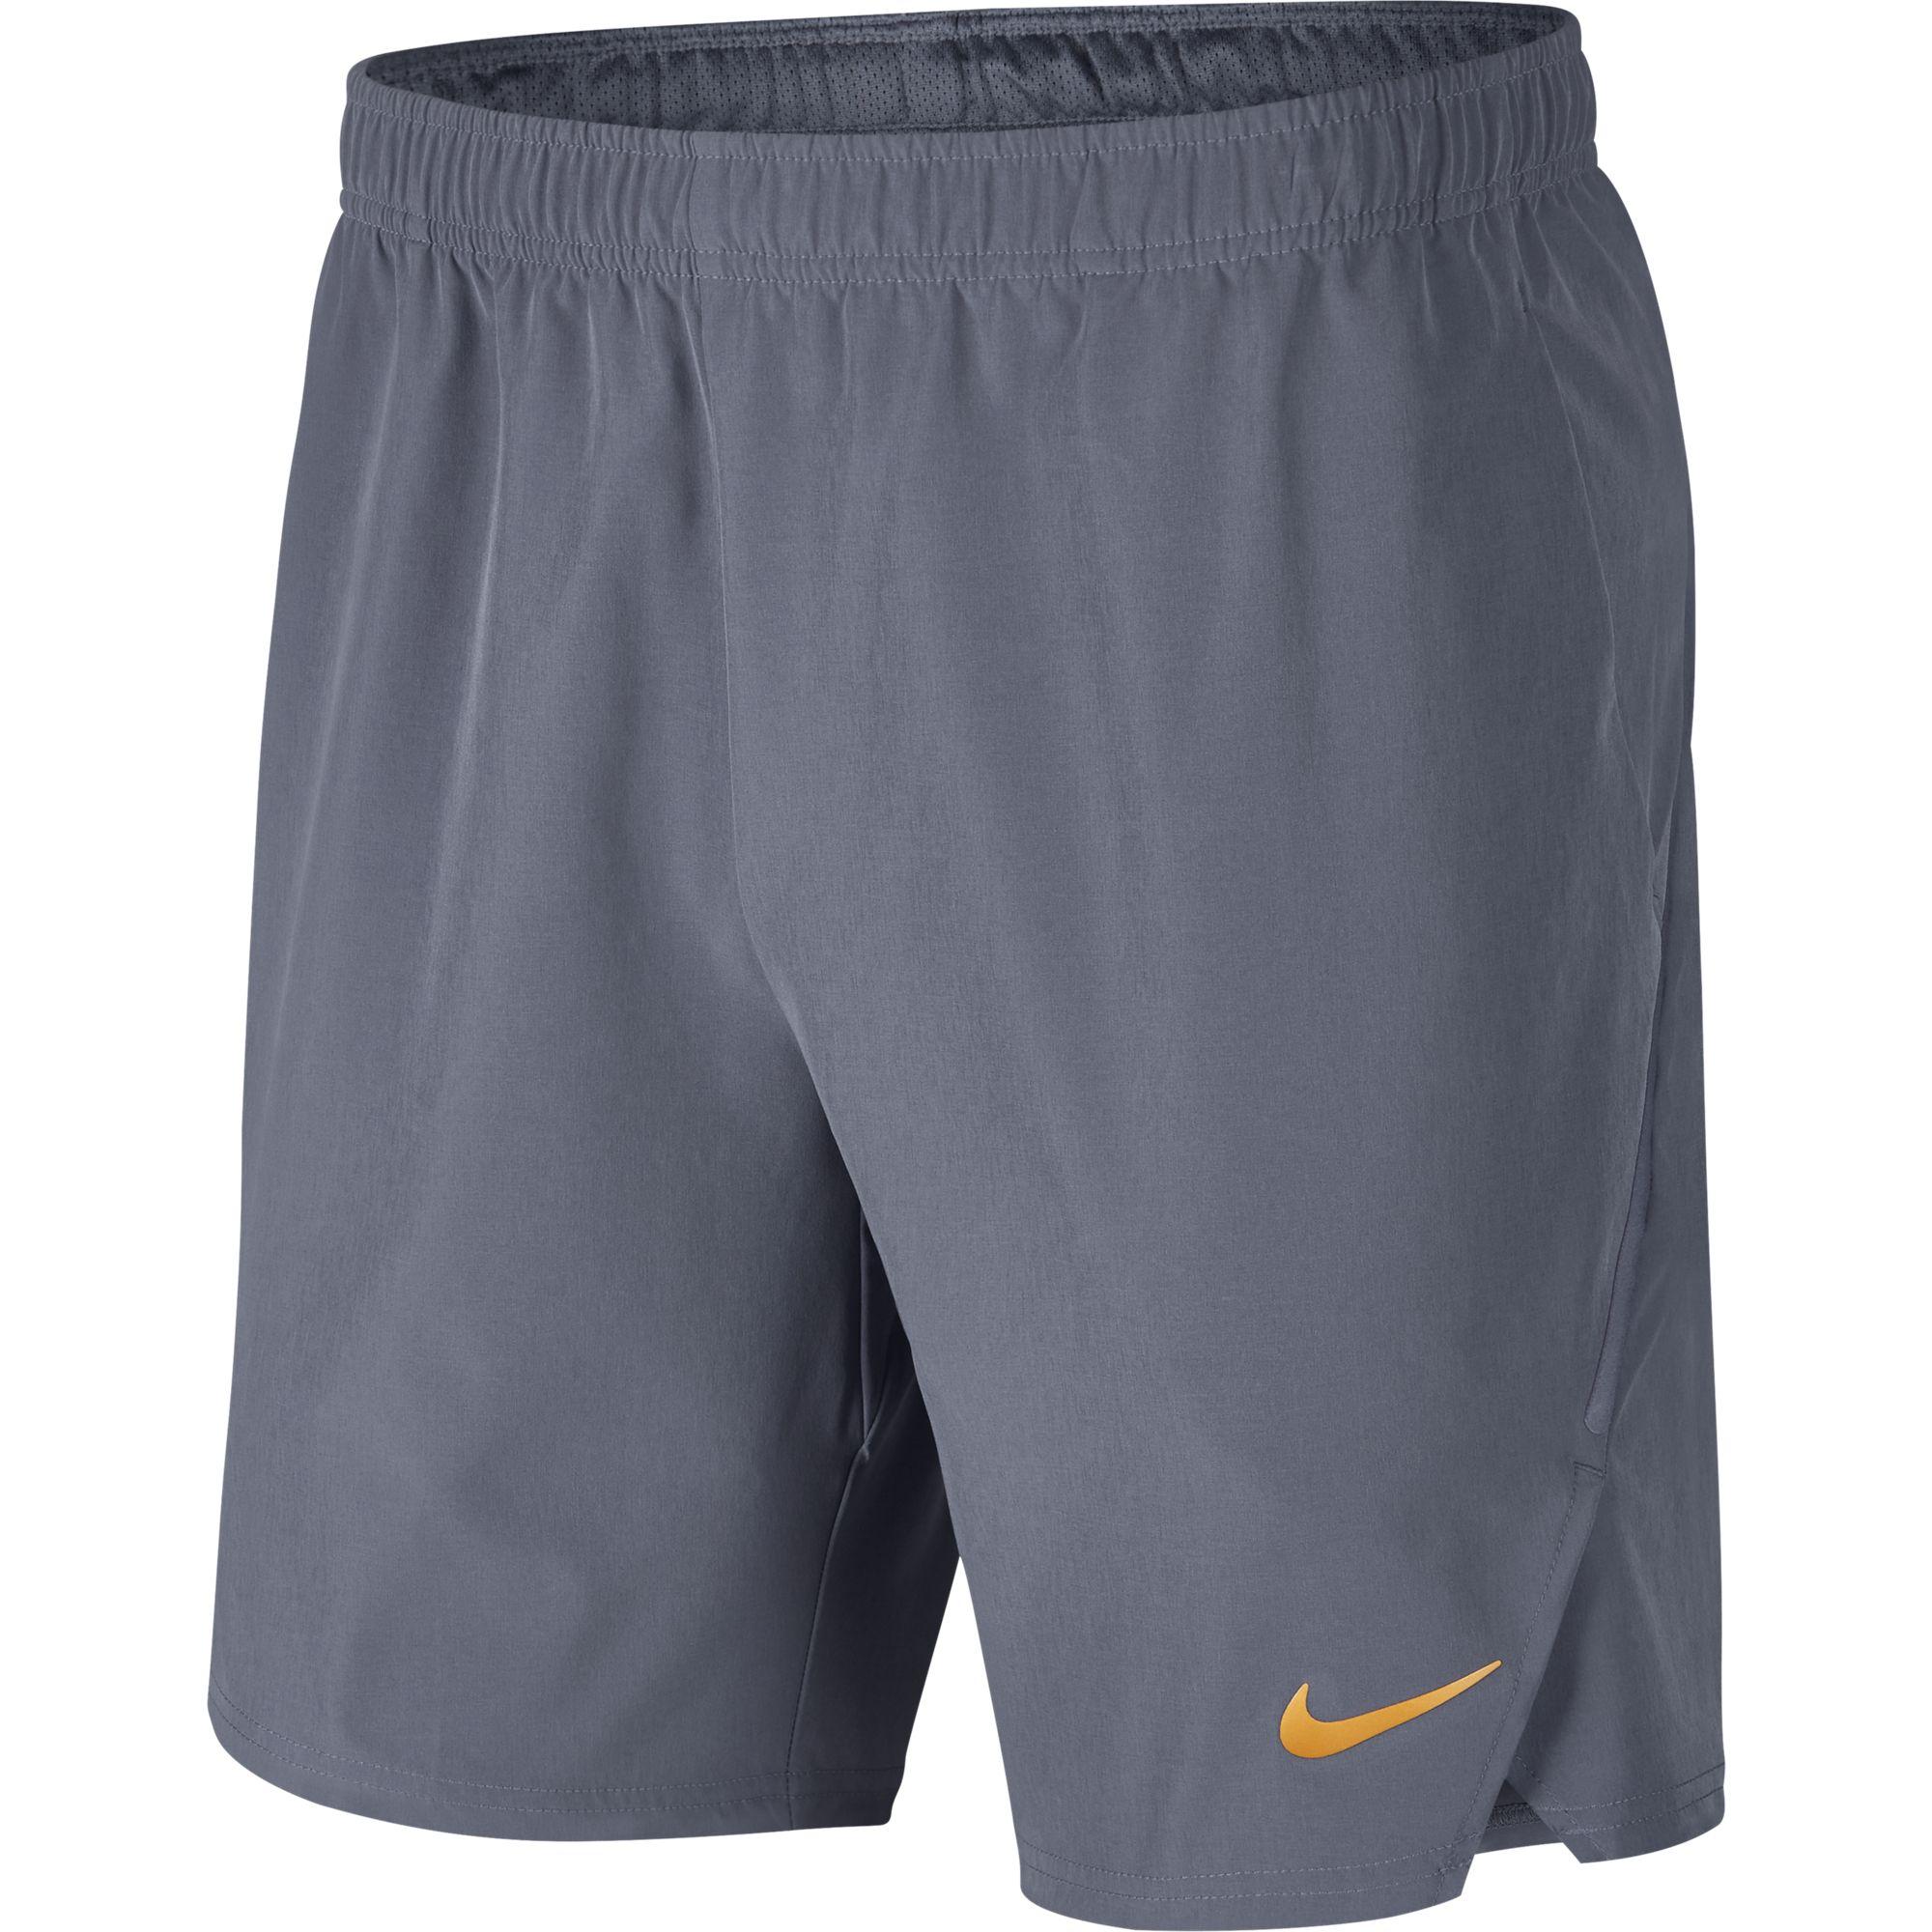 Nike Mens Flex Ace 9 Inch Shorts 